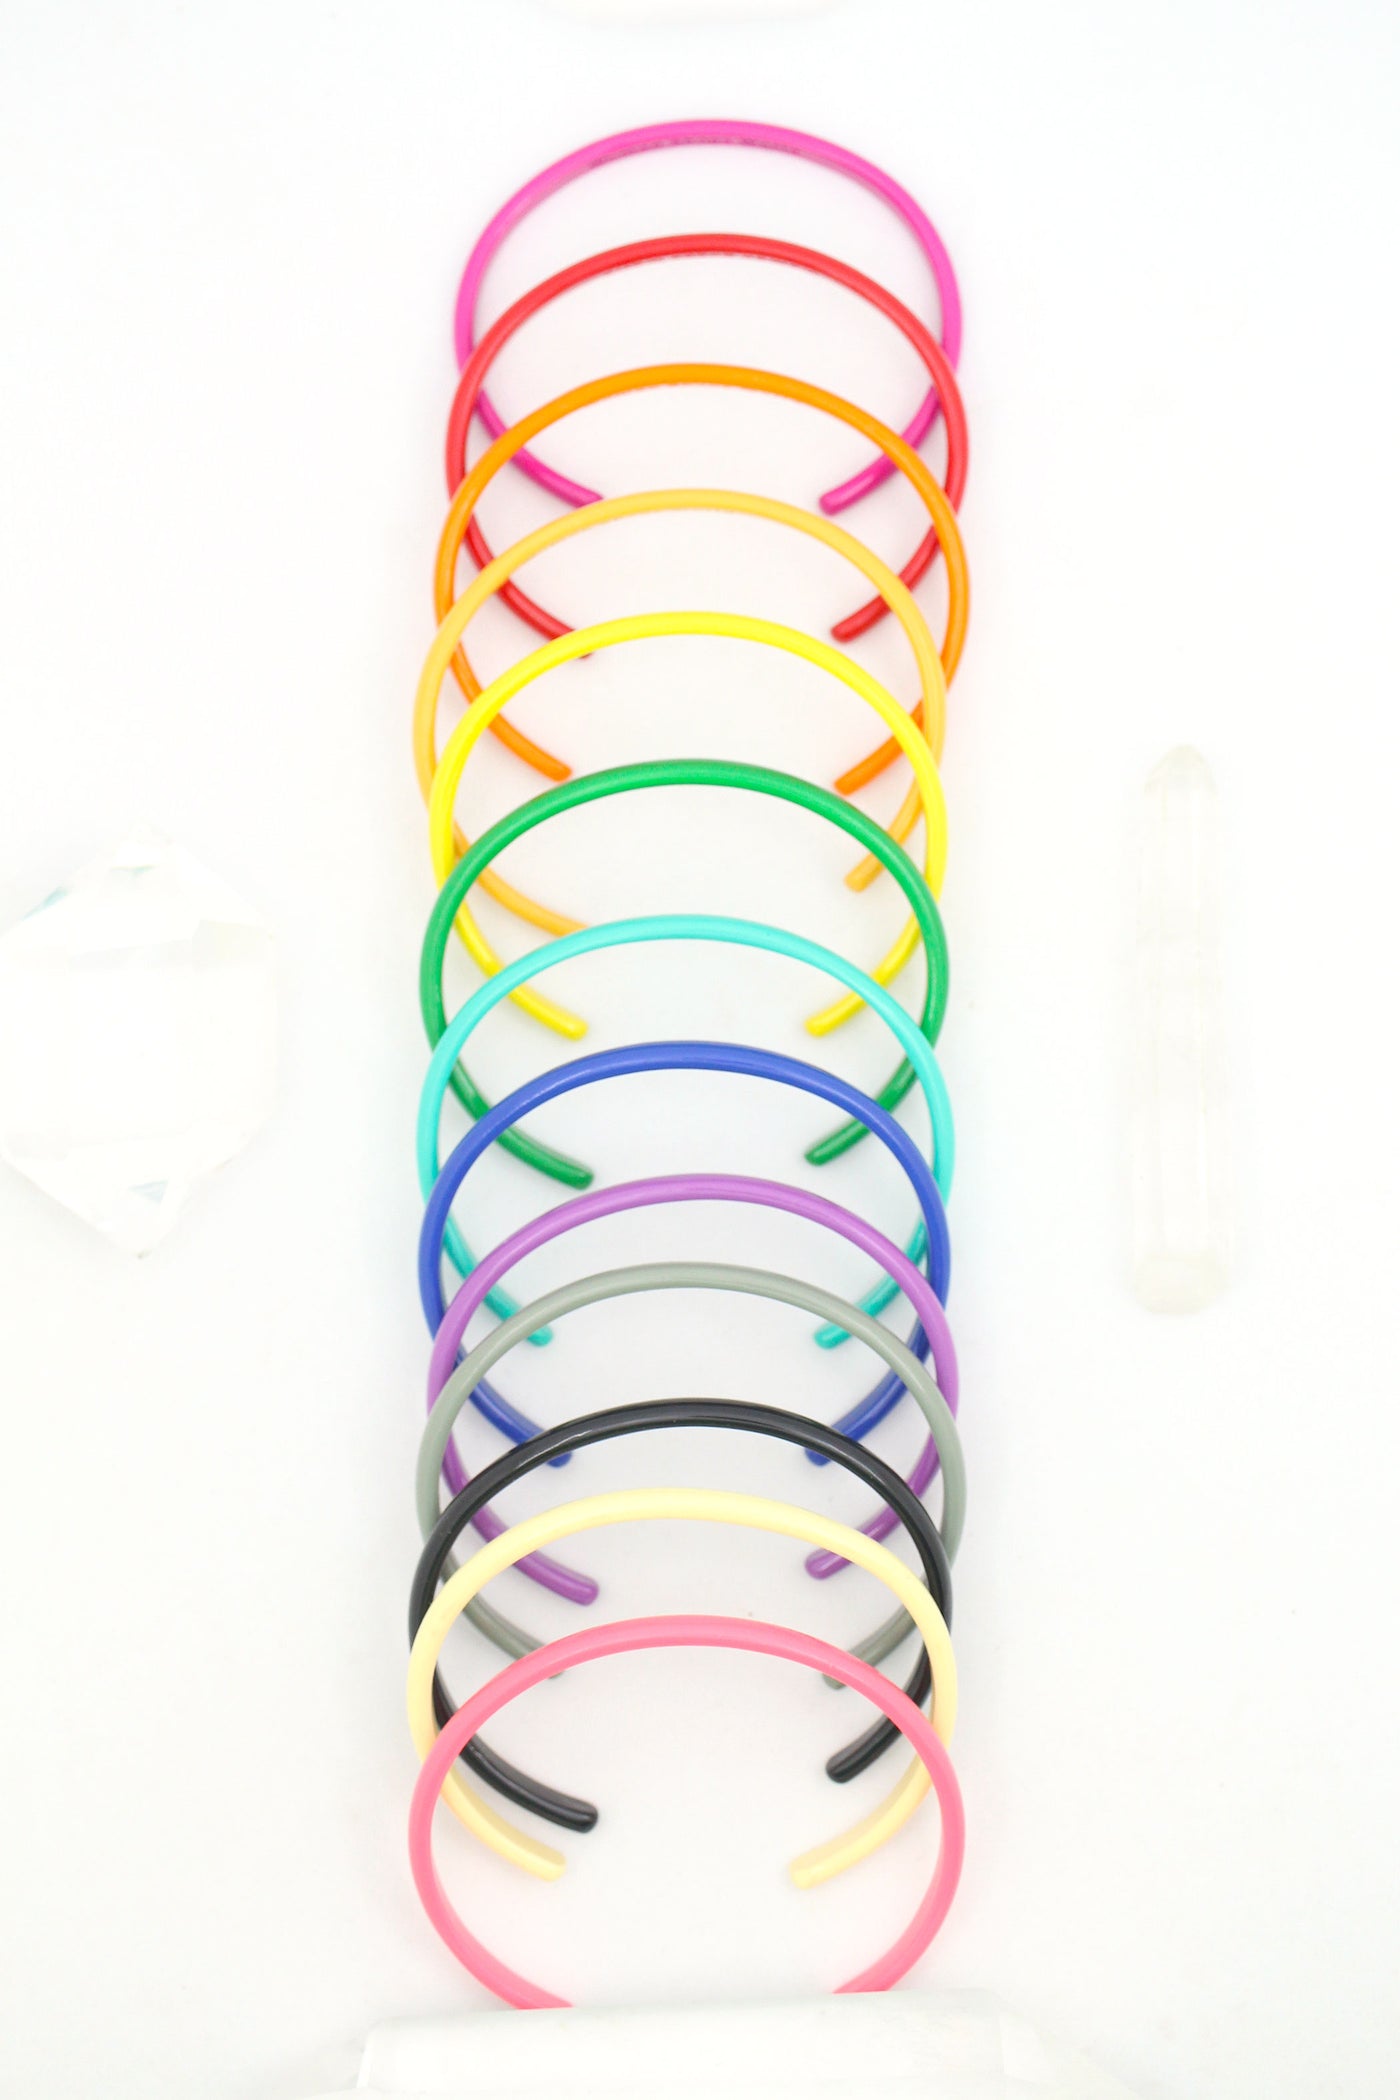 Enamel Cuff Bracelet, Colorful Arm Stack, 1 Bangle